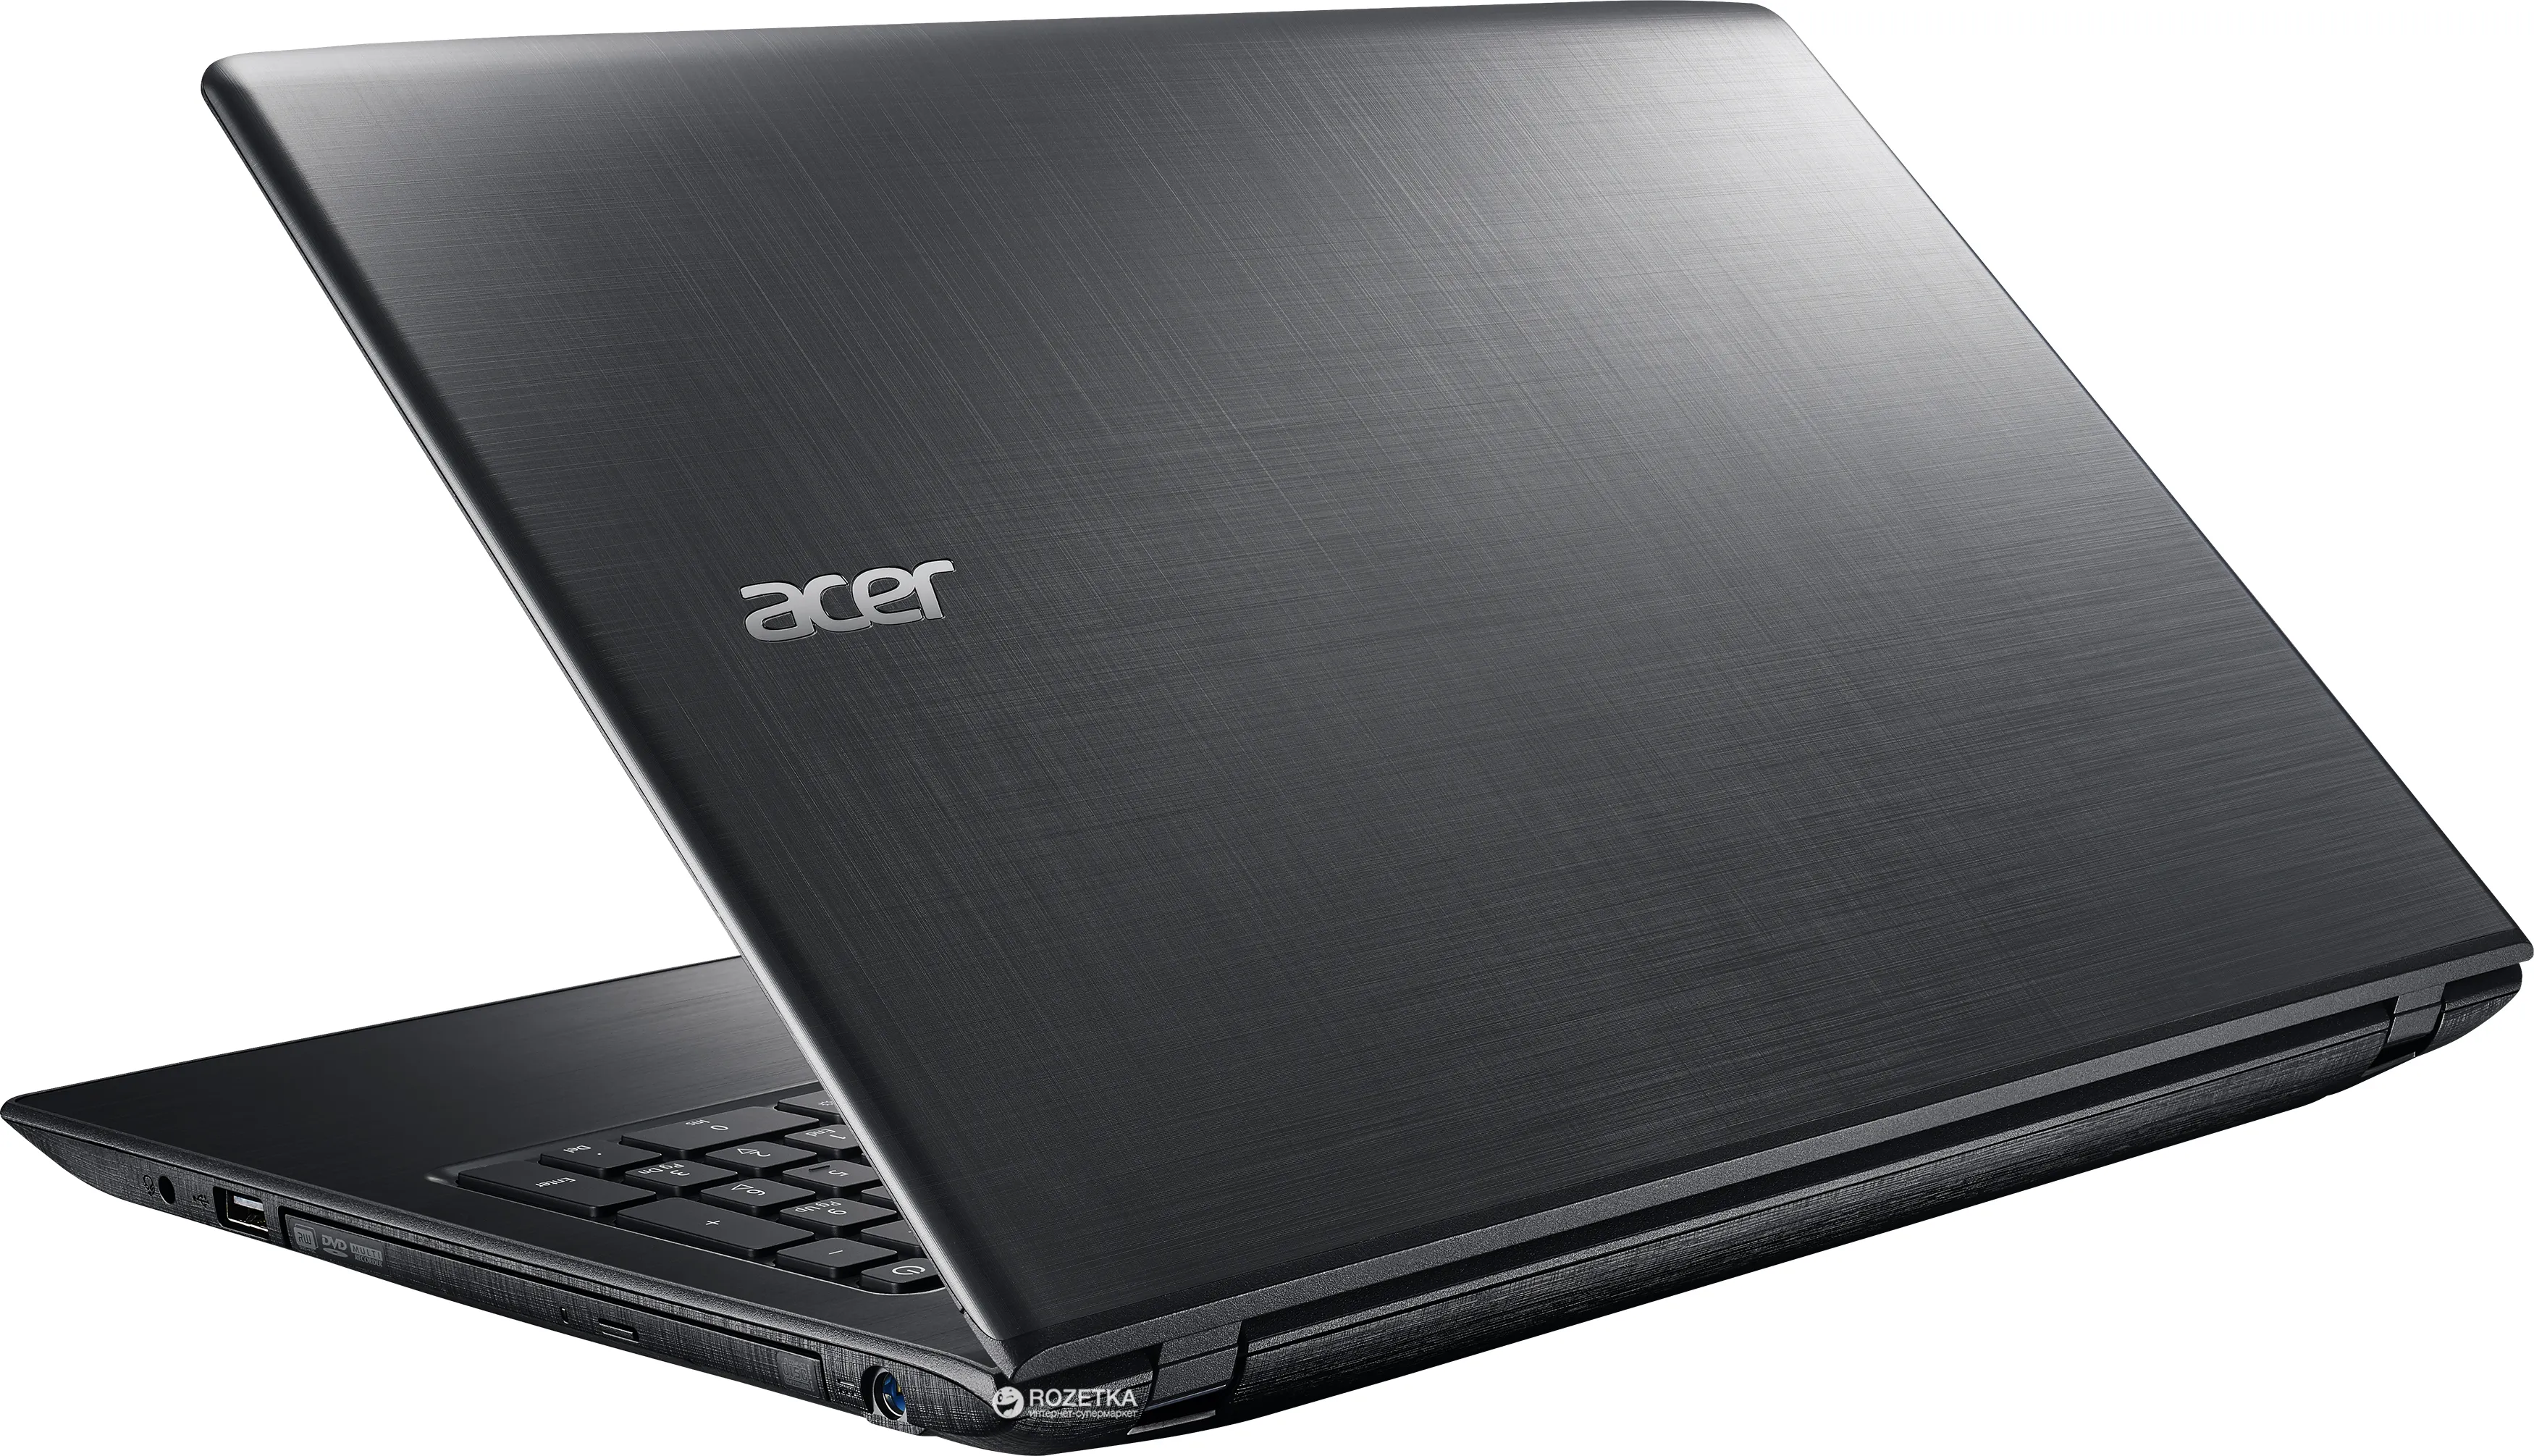 Noutbuk Acer Extensa 15/ Pentium Quad 3710/ DDR3 4 GB/ 500GB HDD /15.6" HD LED/ UMA/ DVD / RUS#8